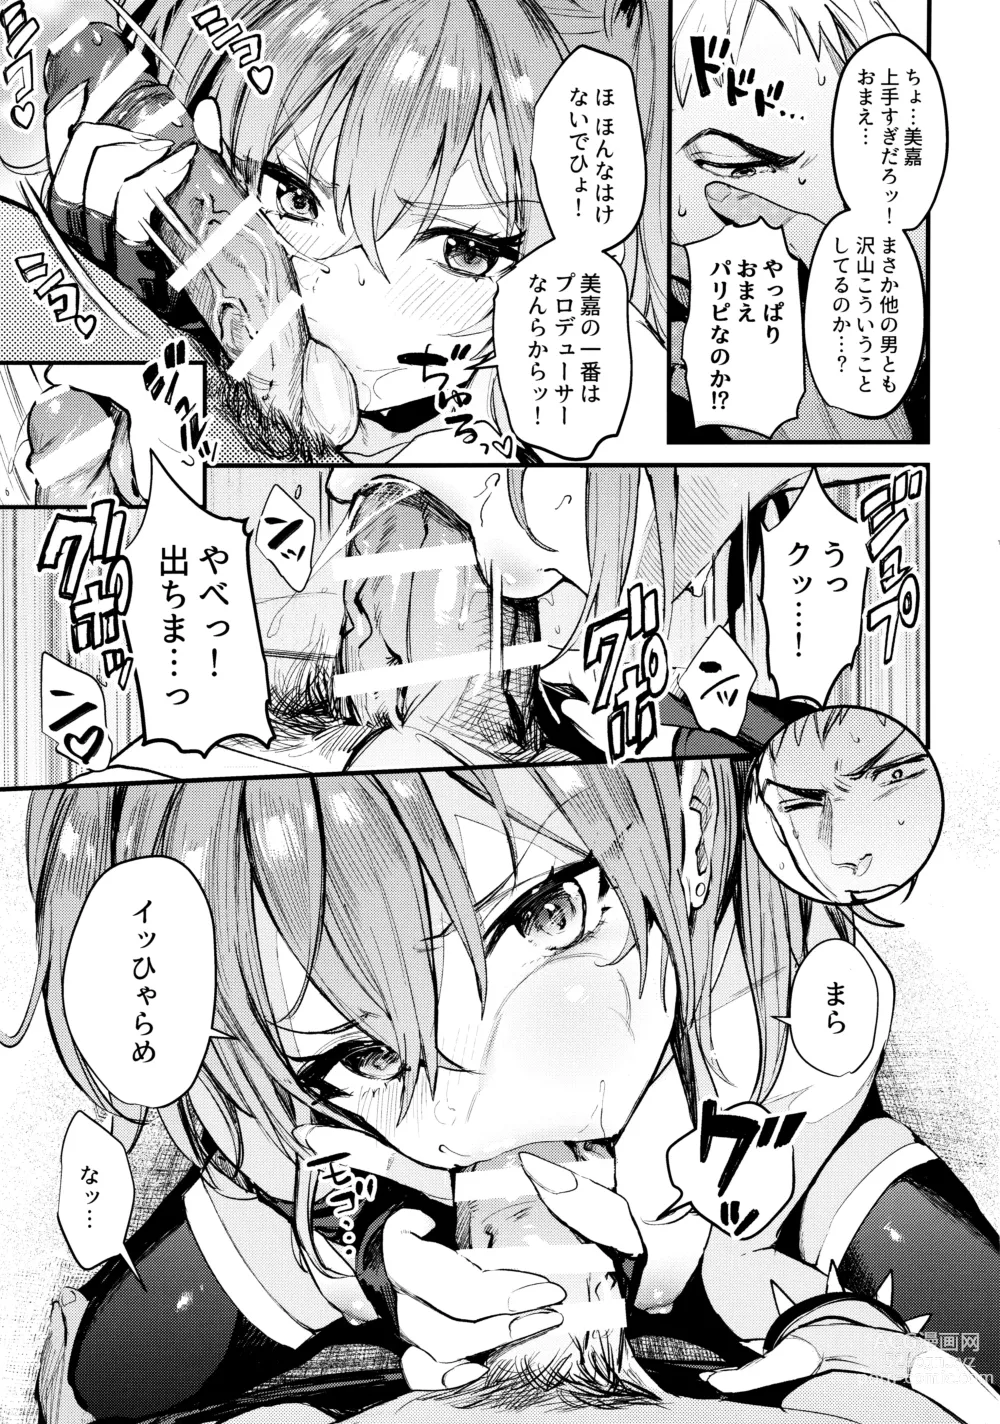 Page 14 of doujinshi Mika to Futari de.